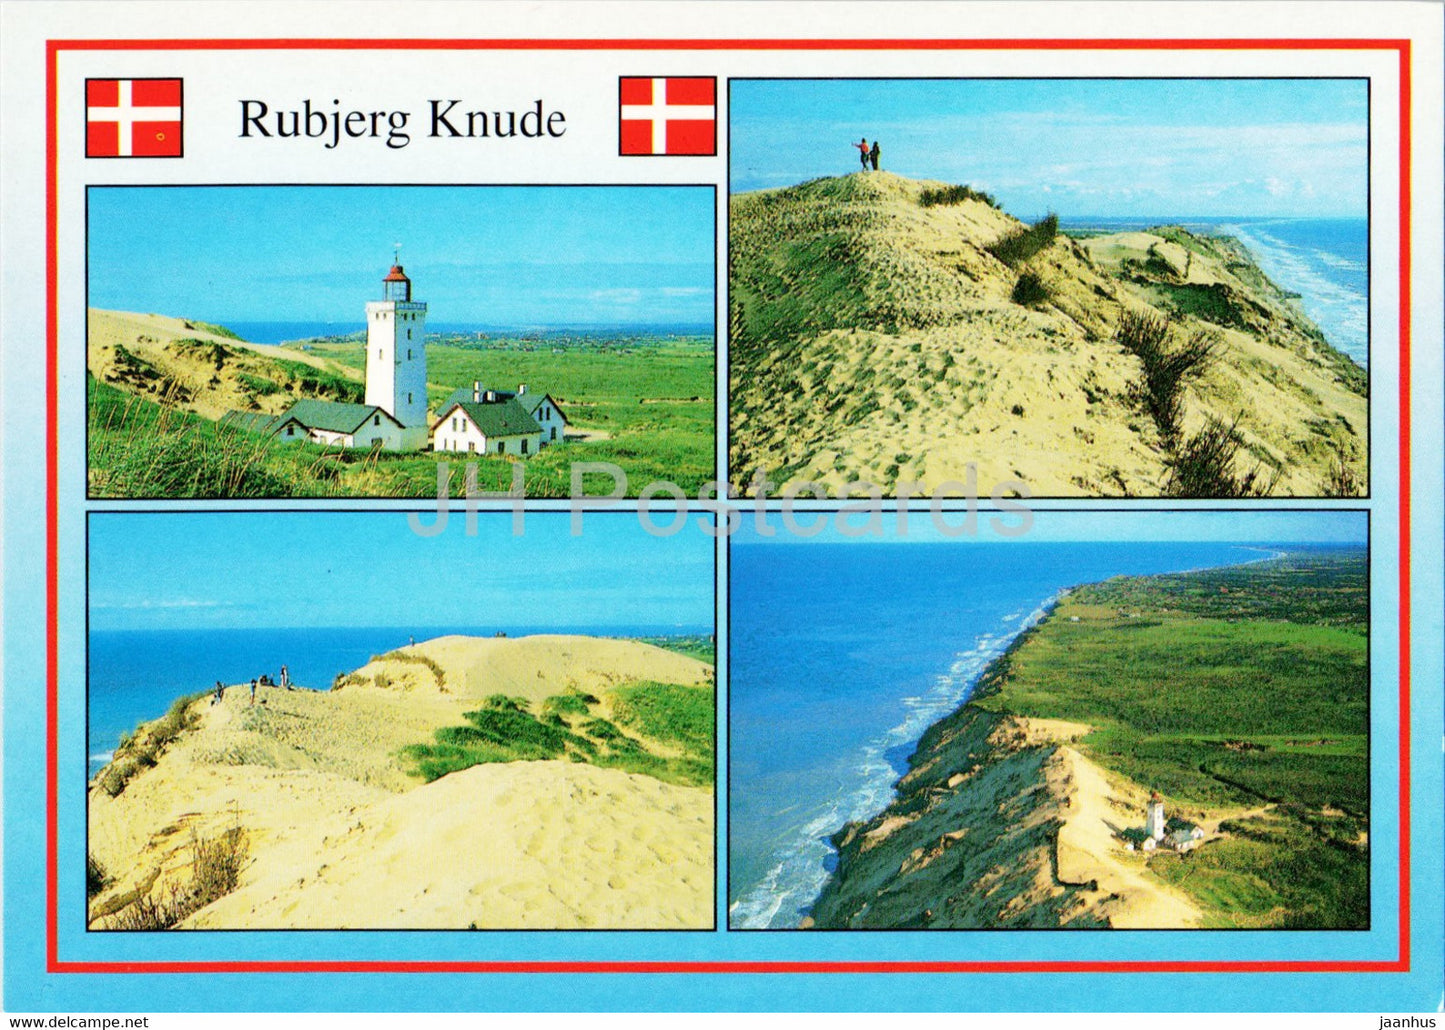 Rubjerg Knude - lighthouse - dunes - multiview - Denmark - unused - JH Postcards